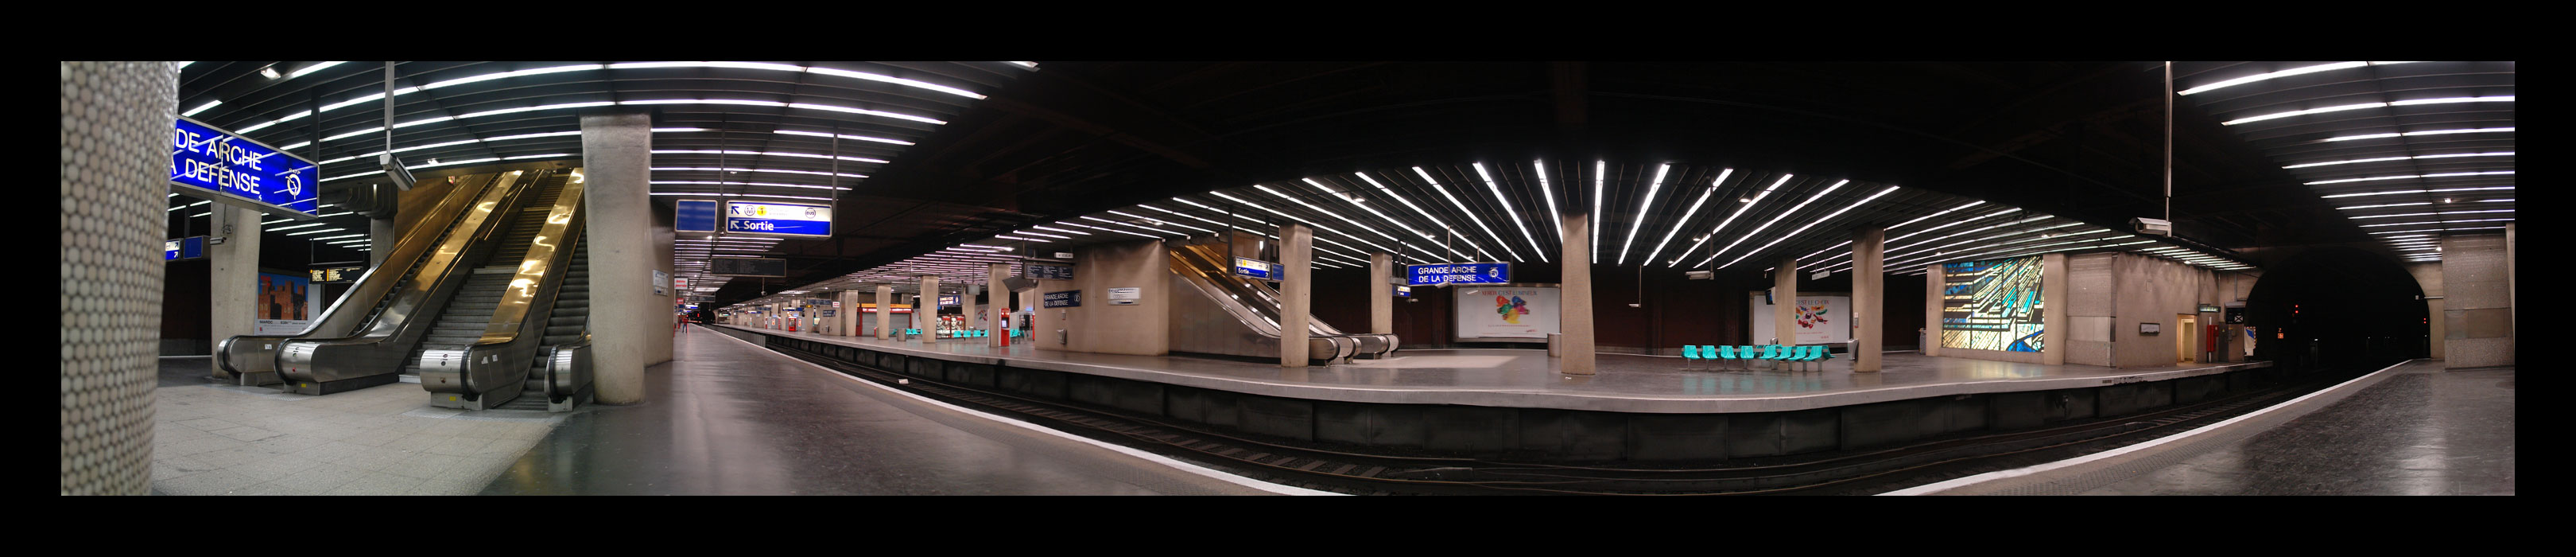 Сделай станцию назад. Станция la Defense. Станция метро ла-Дефанс — Гранд Арш. Метро поезд Корея панорама.